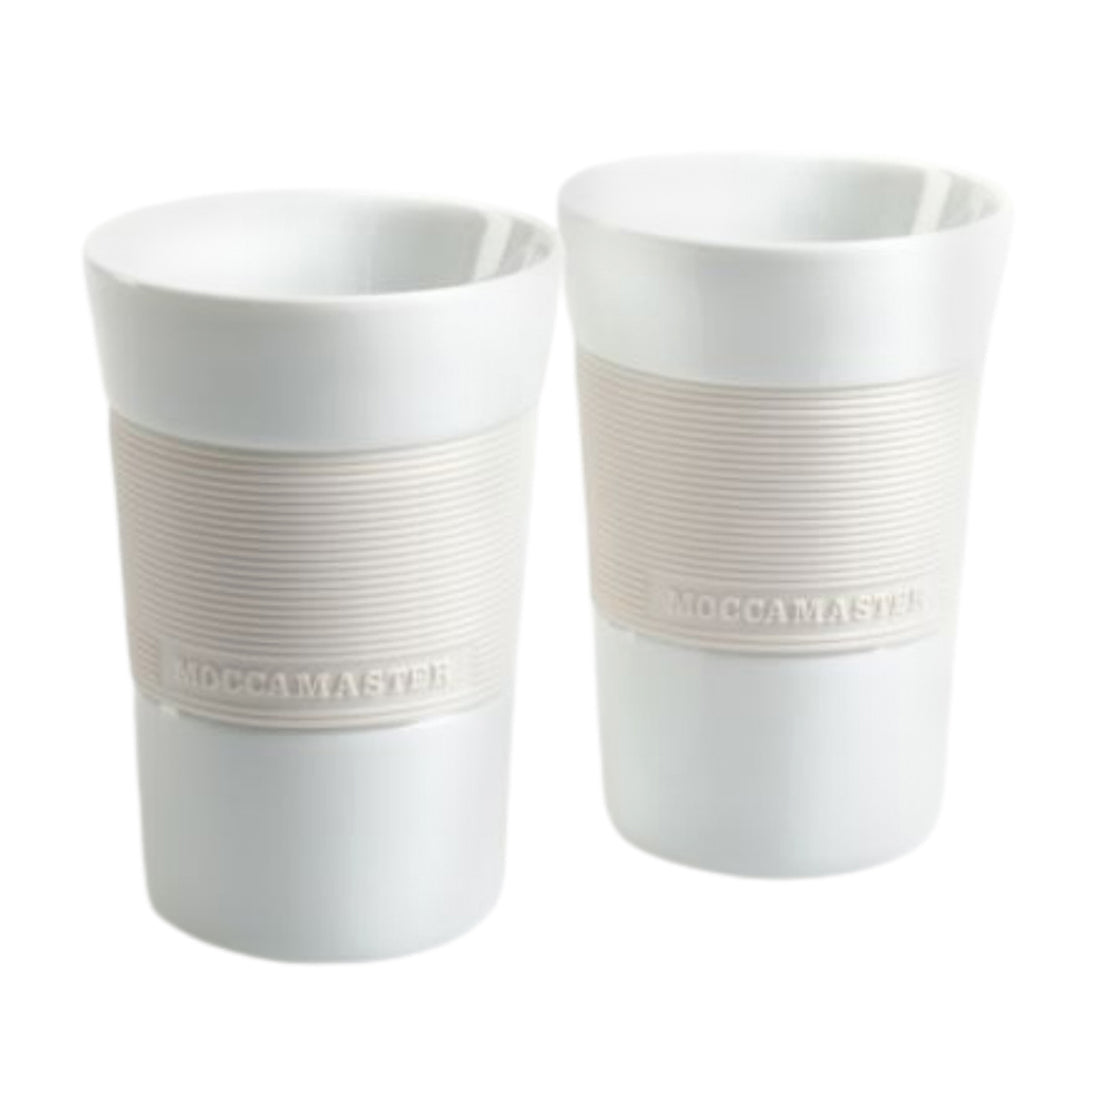 Moccamaster, Moccamaster 2 Coffeemugs - Off-white, Redber Coffee